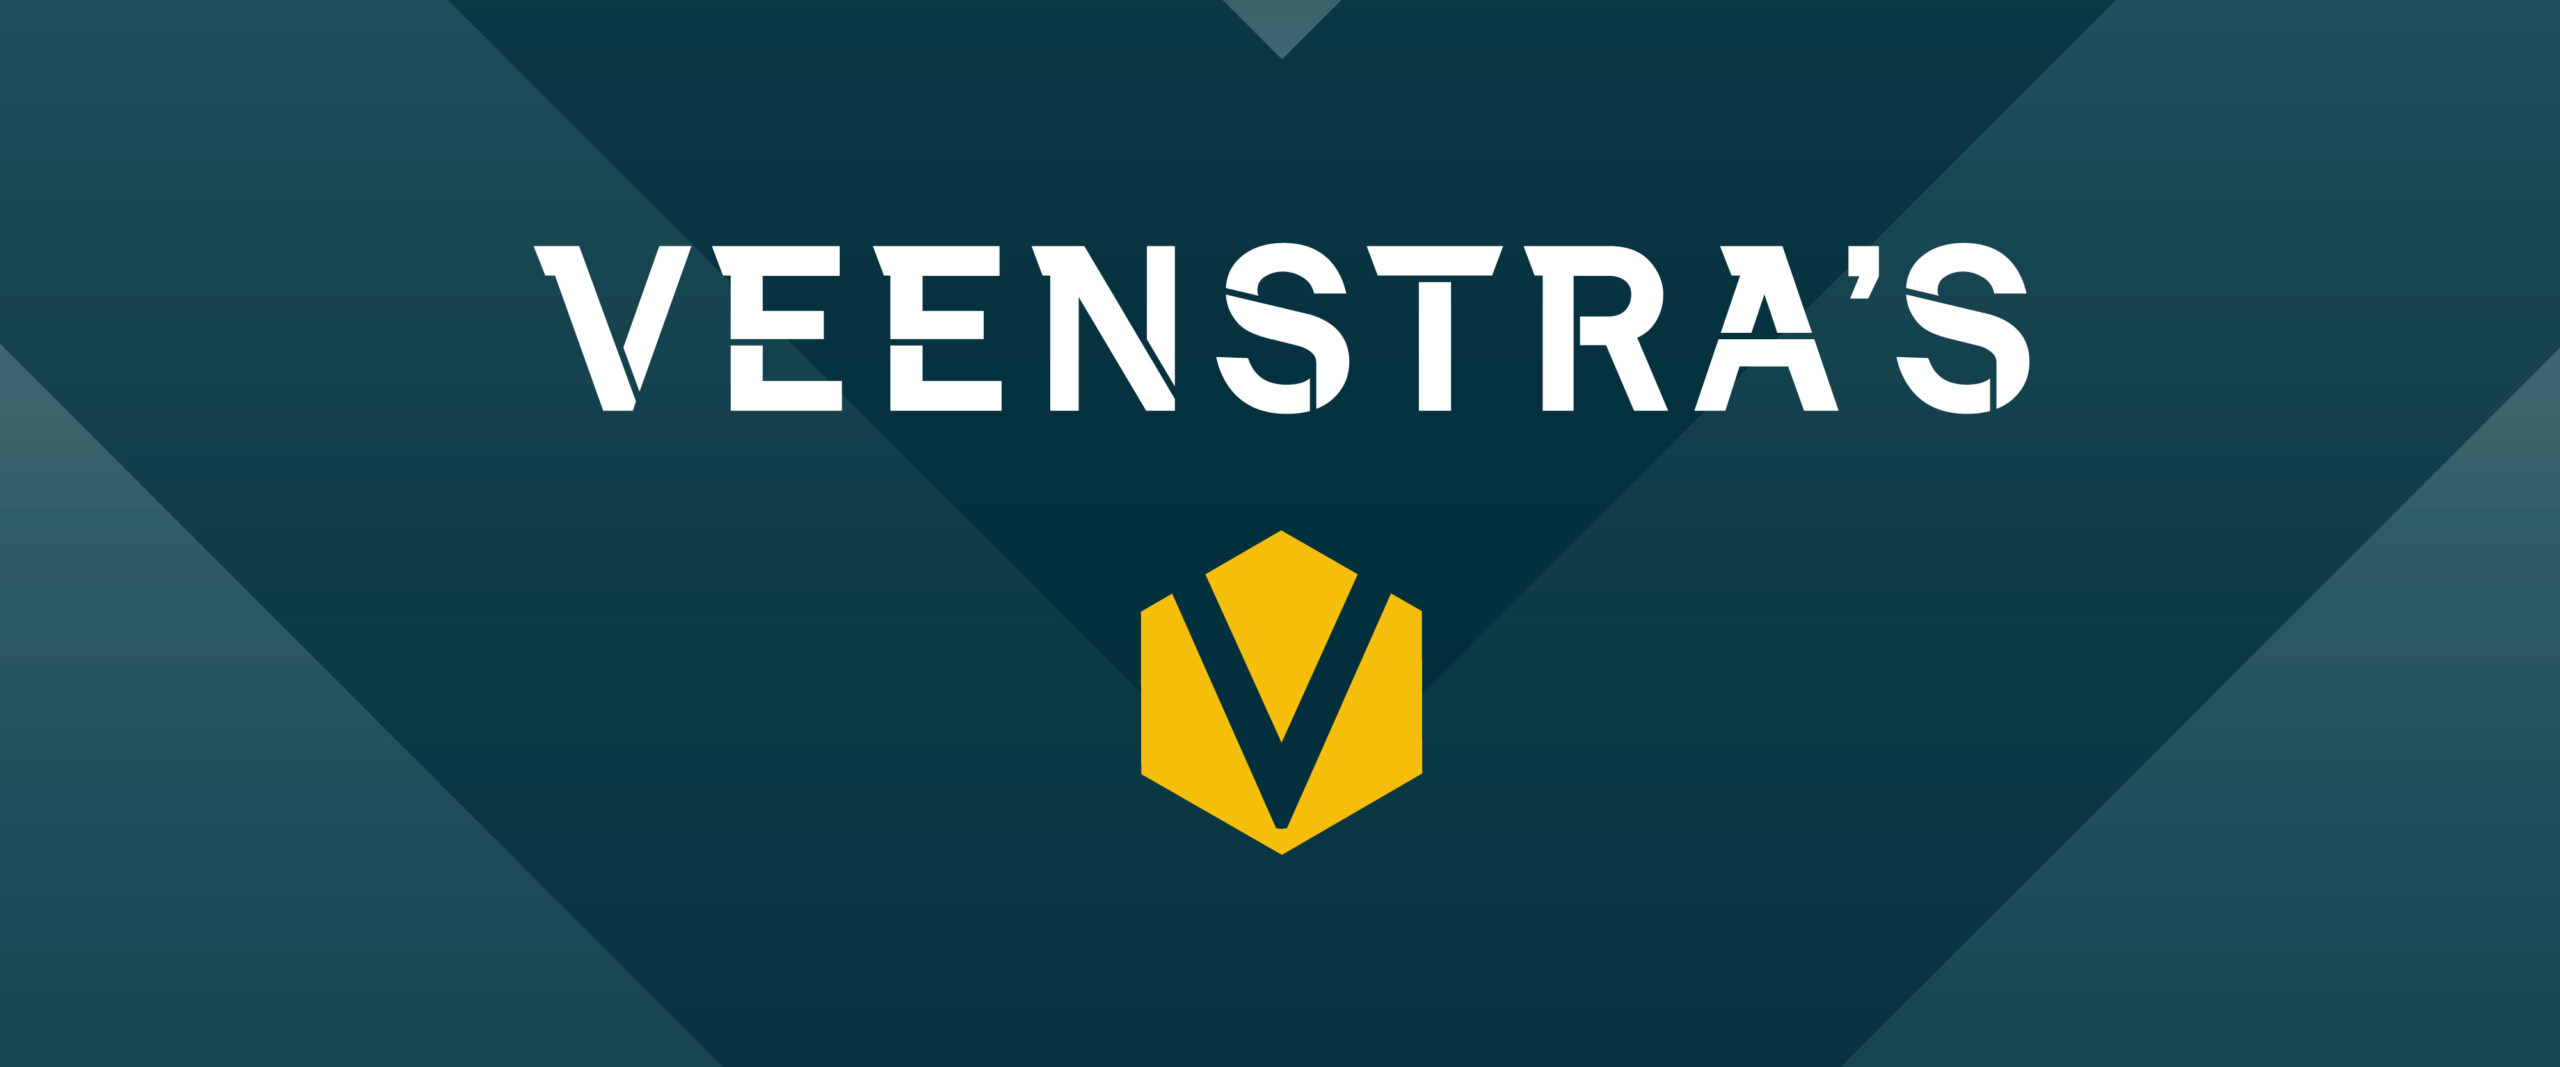 Veenstra's Logo